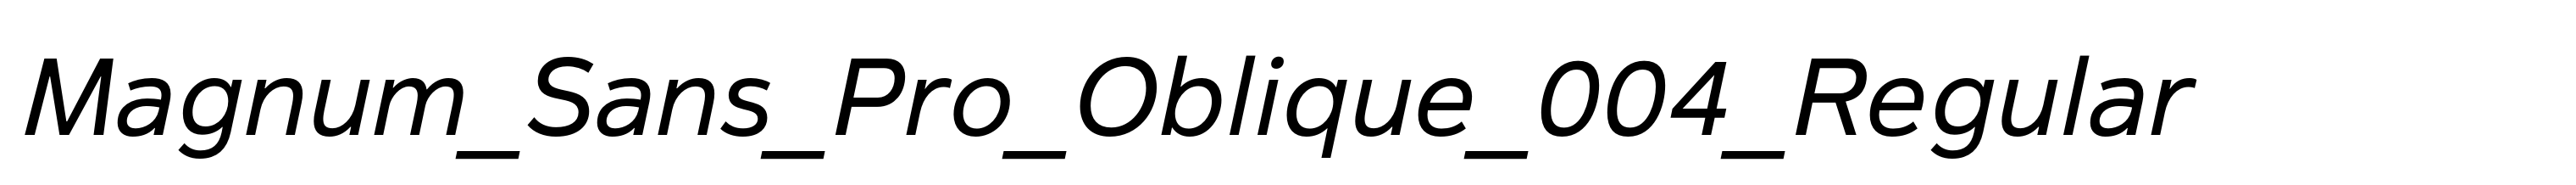 Magnum_Sans_Pro_Oblique_004_Regular